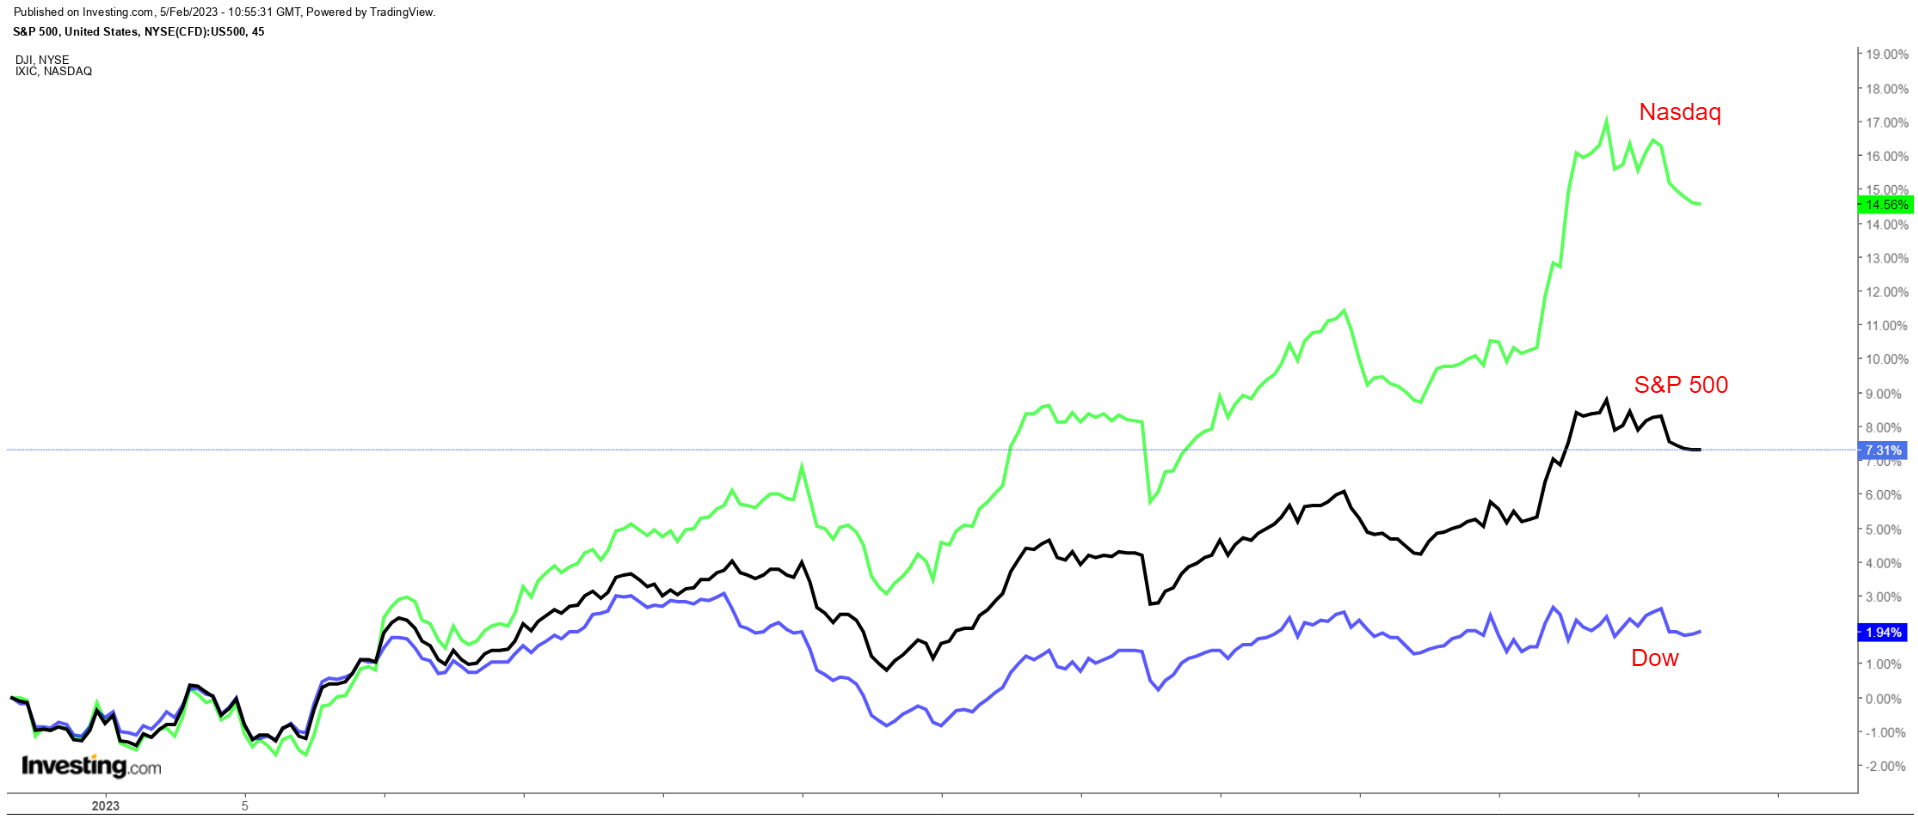 S&P 500 vs. Nasdaq vs. Dow 